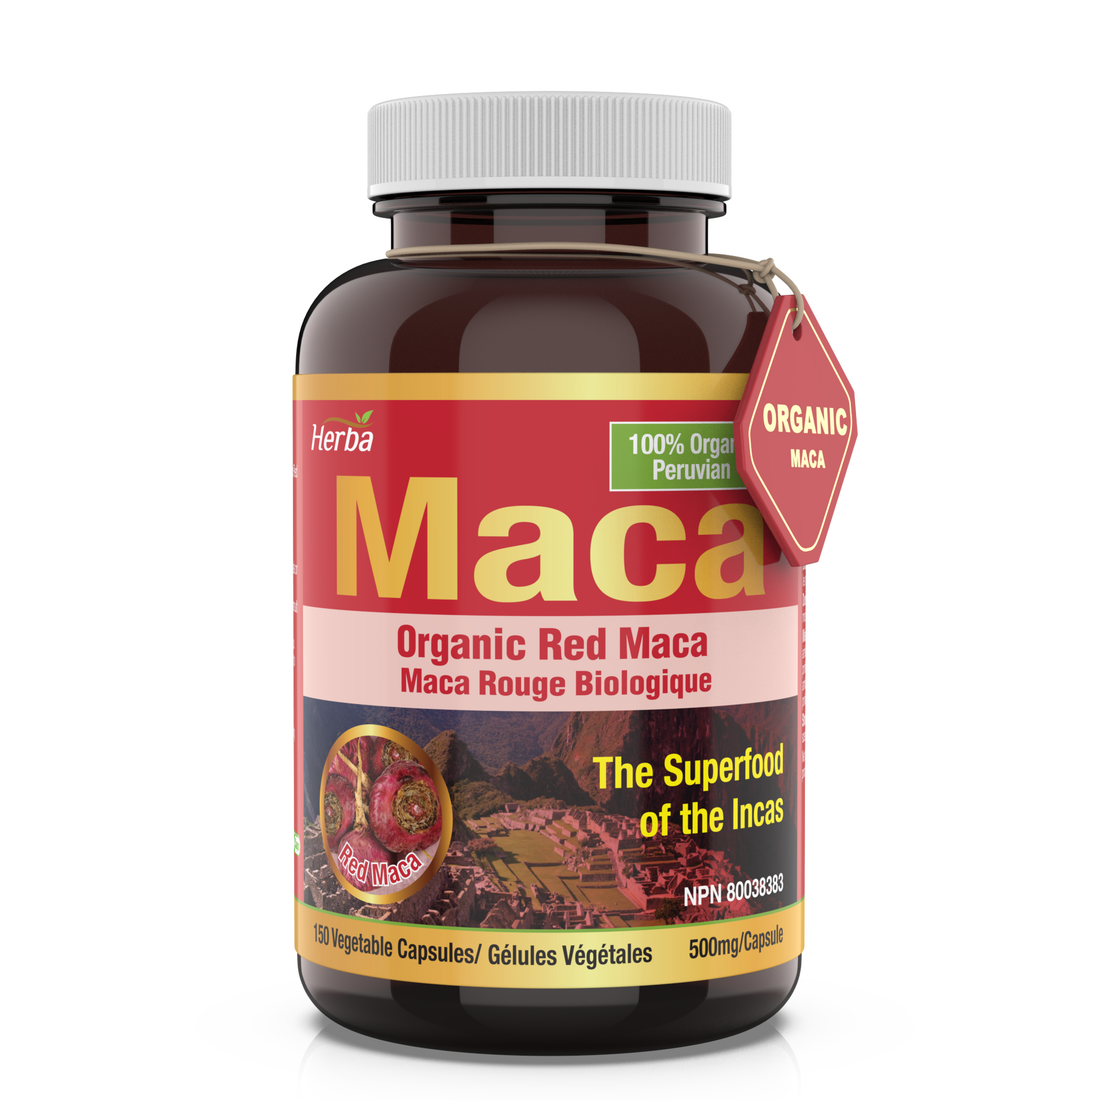 Herba Organic Red Maca Capsules for Women – 500mg, 150 Capsules